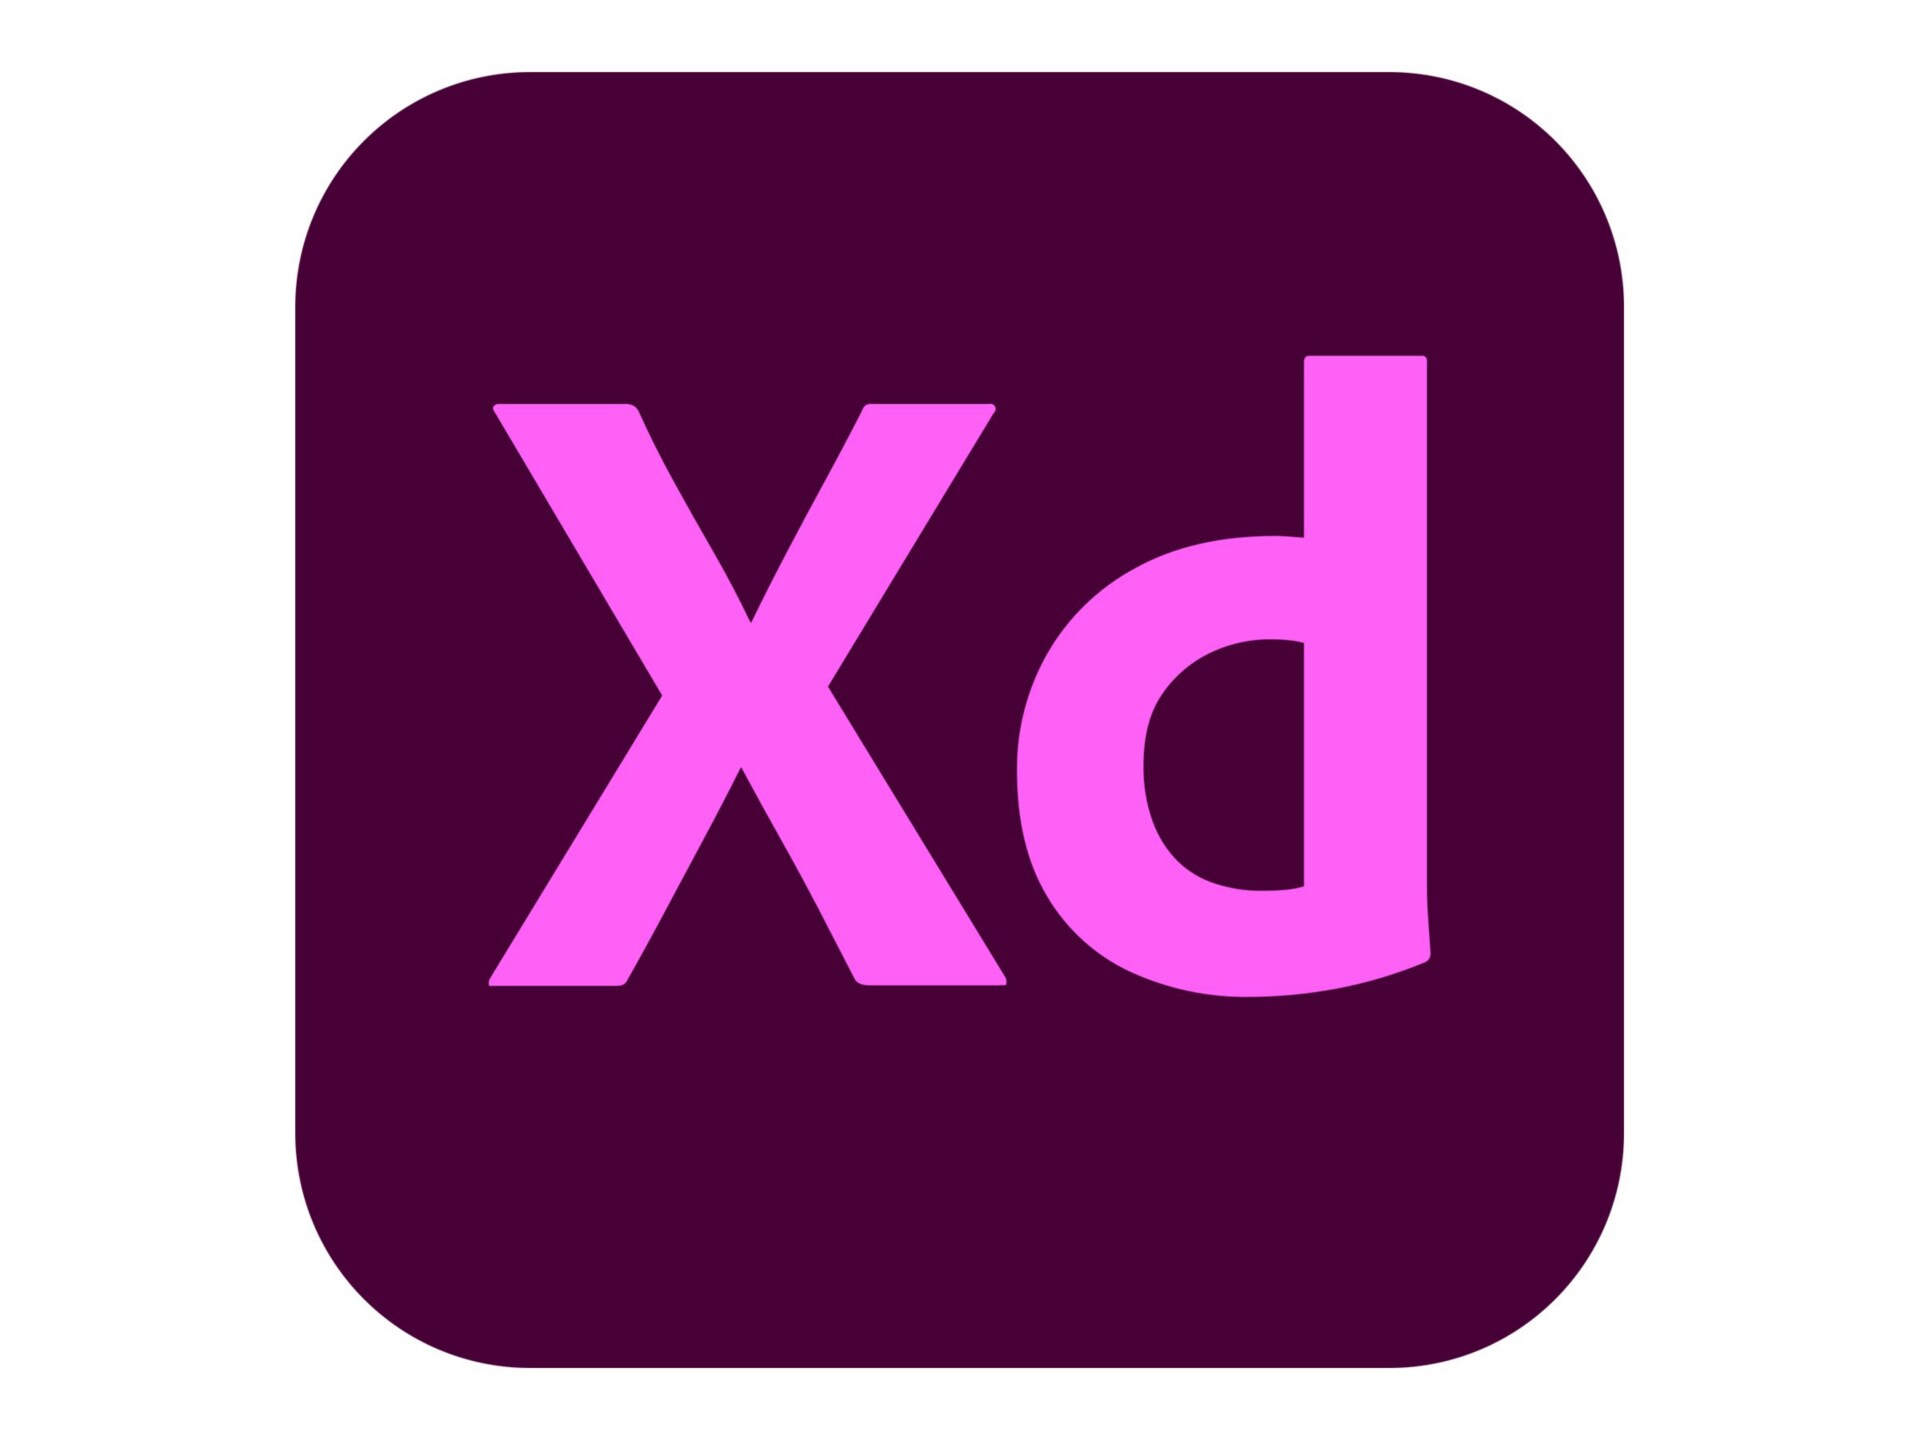 Adobe XD CC for Enterprise - Subscription New (6 months) - 1 named user